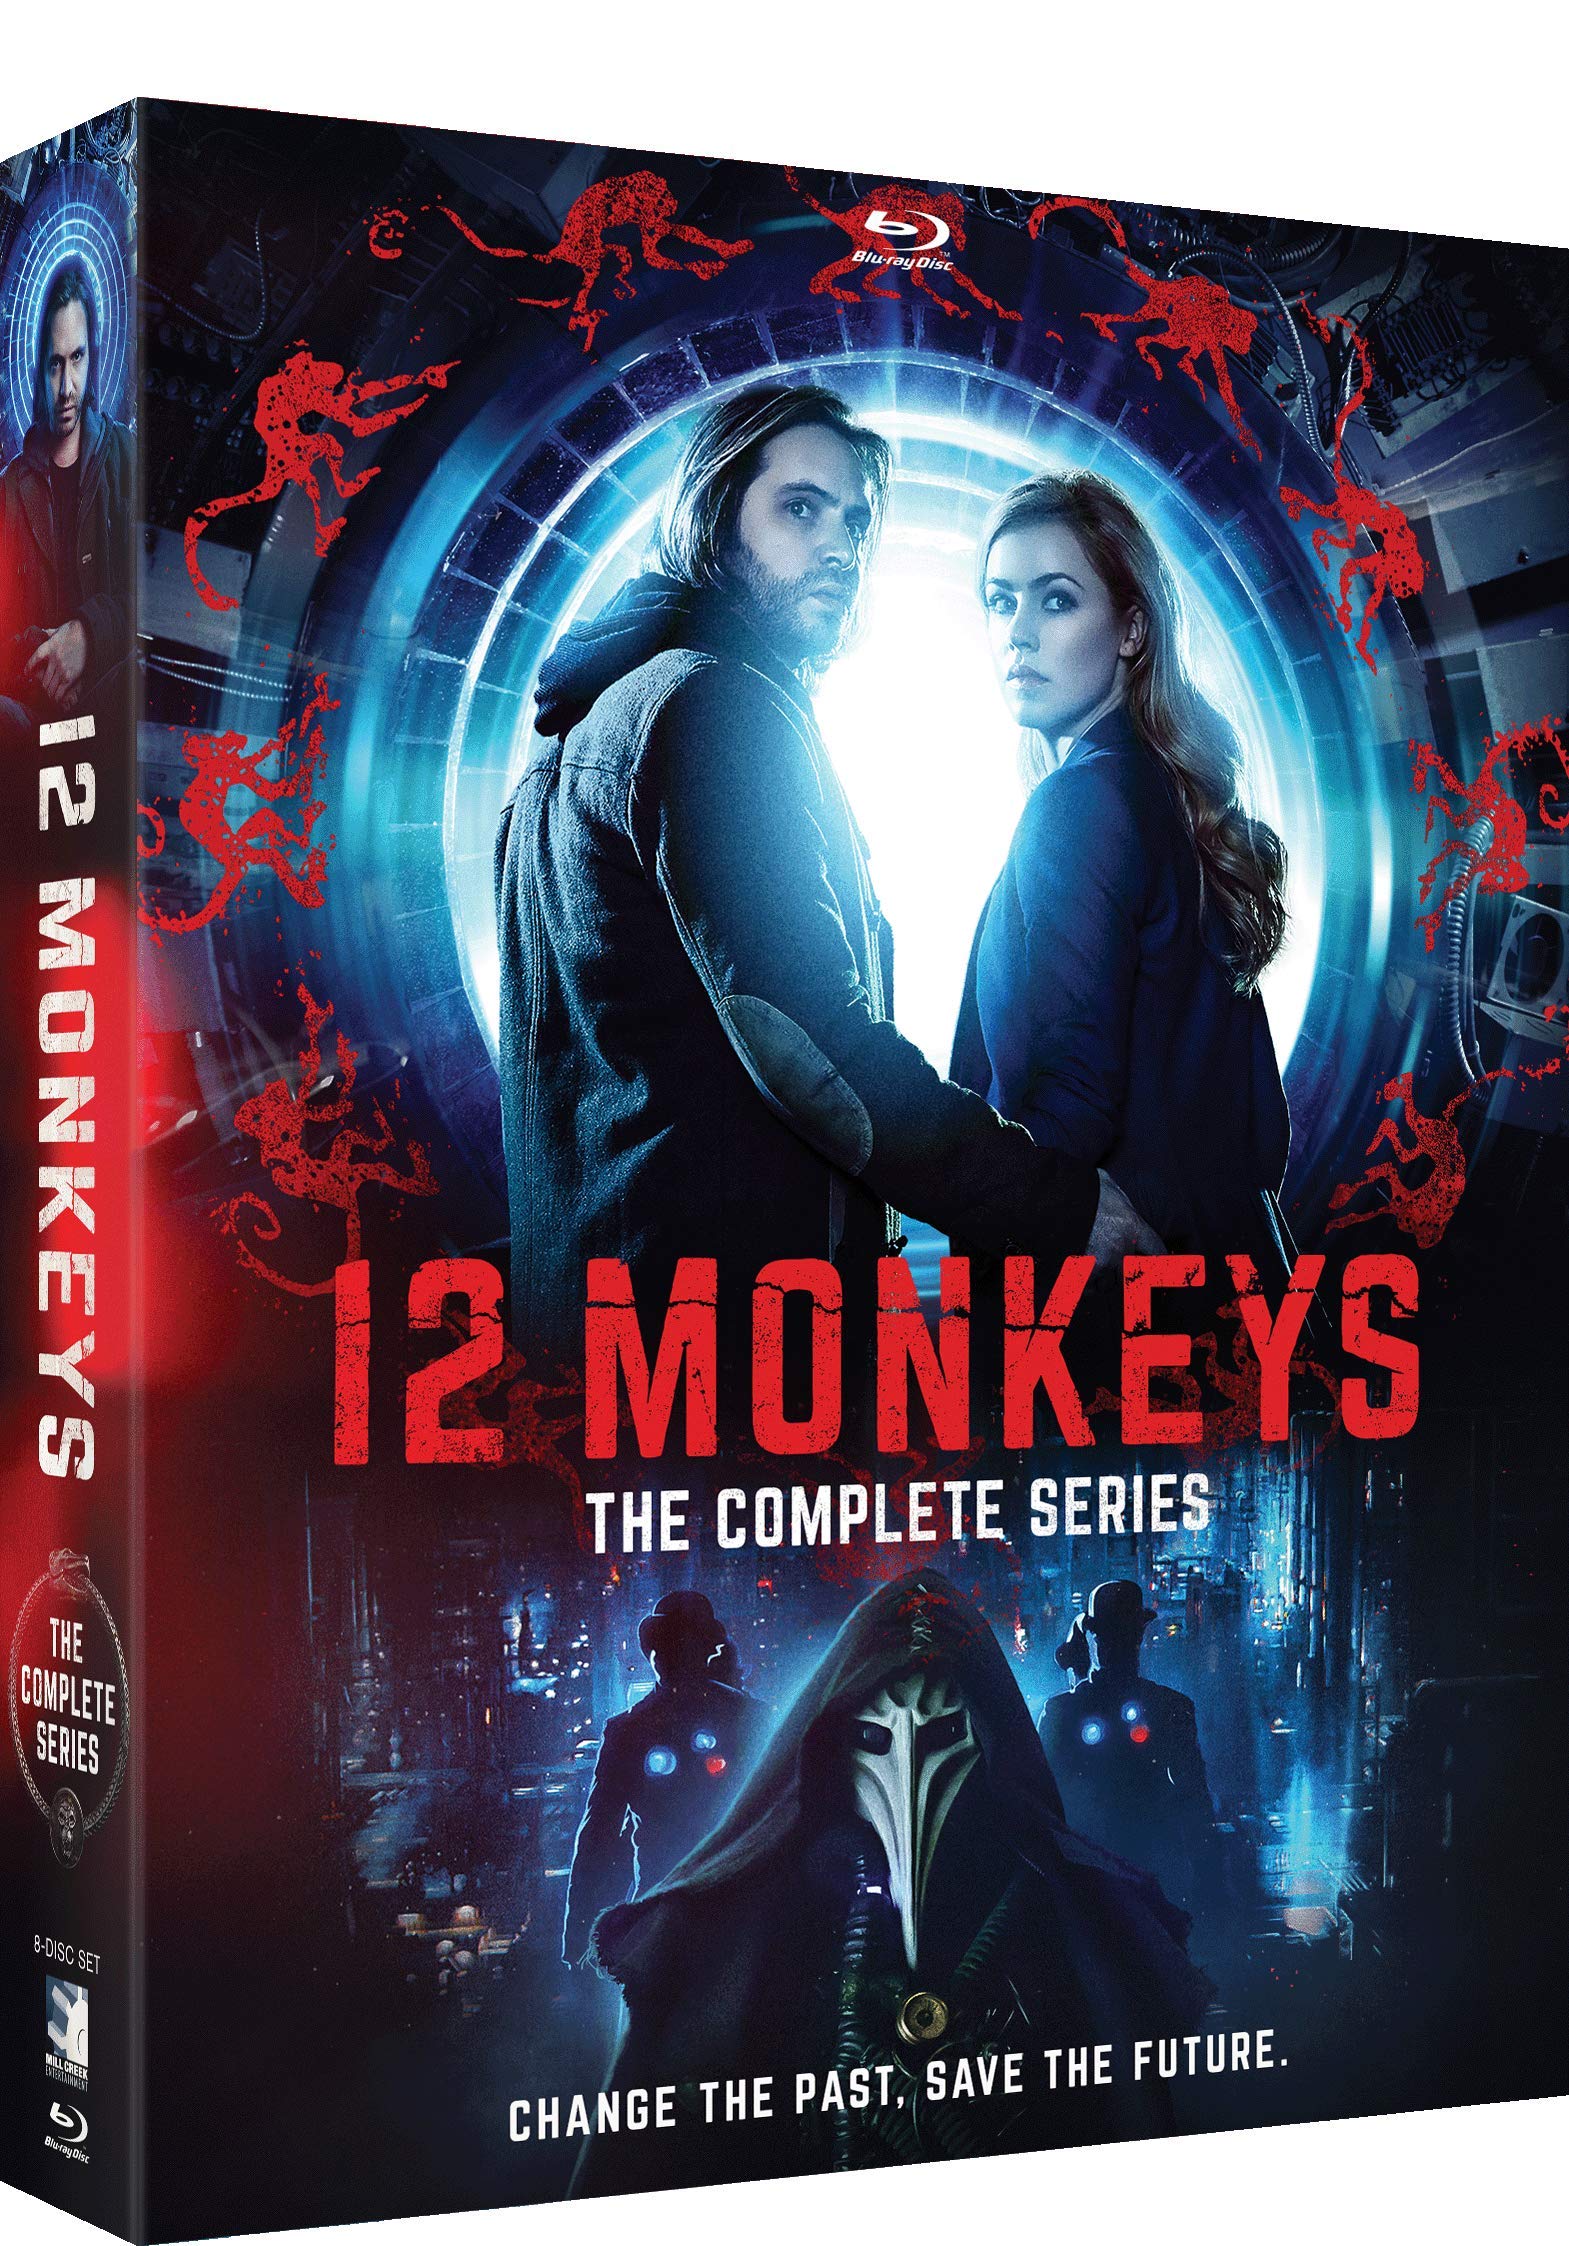 12 Monkeys - The Complete Series [Blu-ray] $27.96 via Amazon